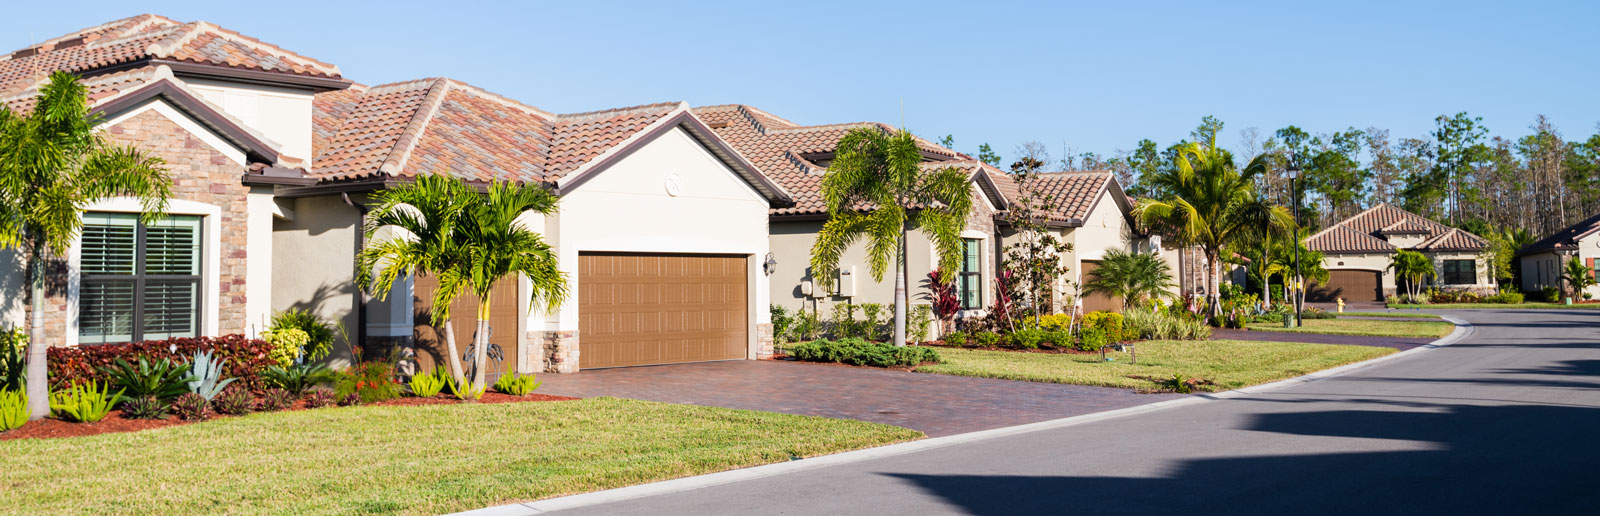 Miami Reverse Mortgages, Information For Miami, FL.